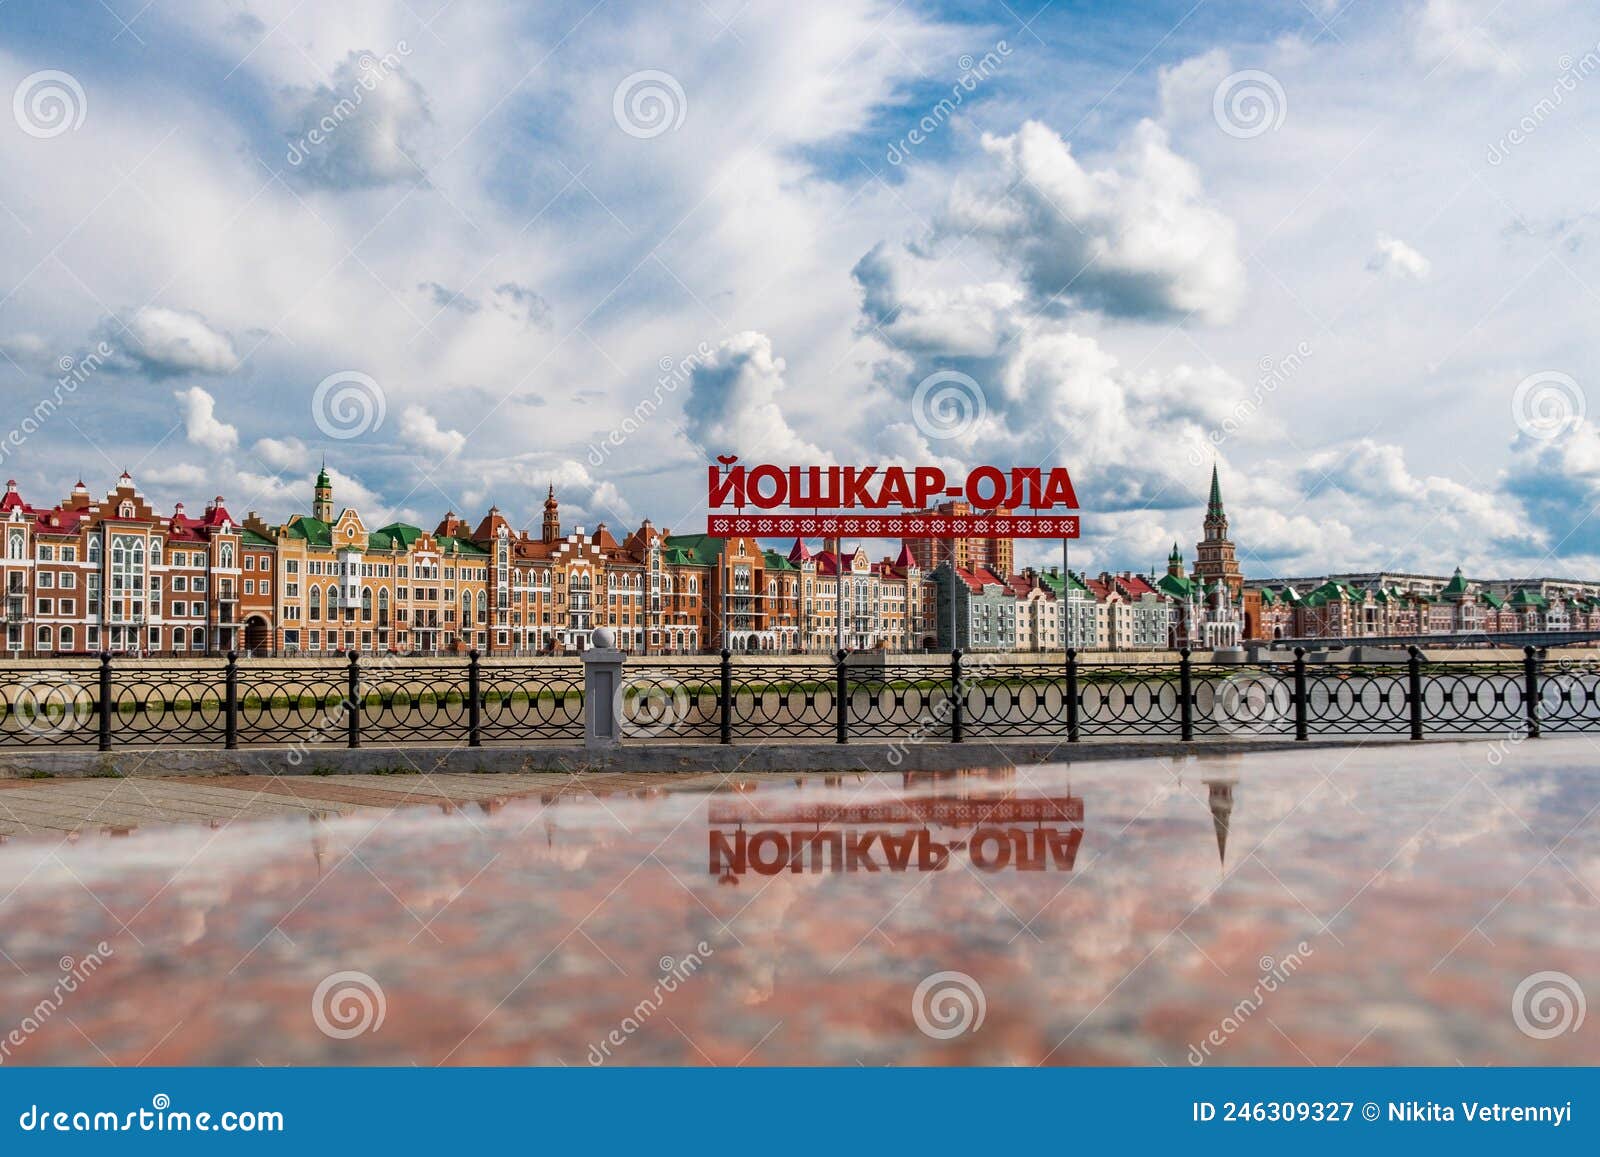 Kajen i yoshkarola i rysk kopia av vattenfronten i staden med pennor i belgium. Yoshkarola russia jule 2019 brugkajen i staden yoshkarola i rysk kopia av vattenfronten i staden Brygges i Belgien.